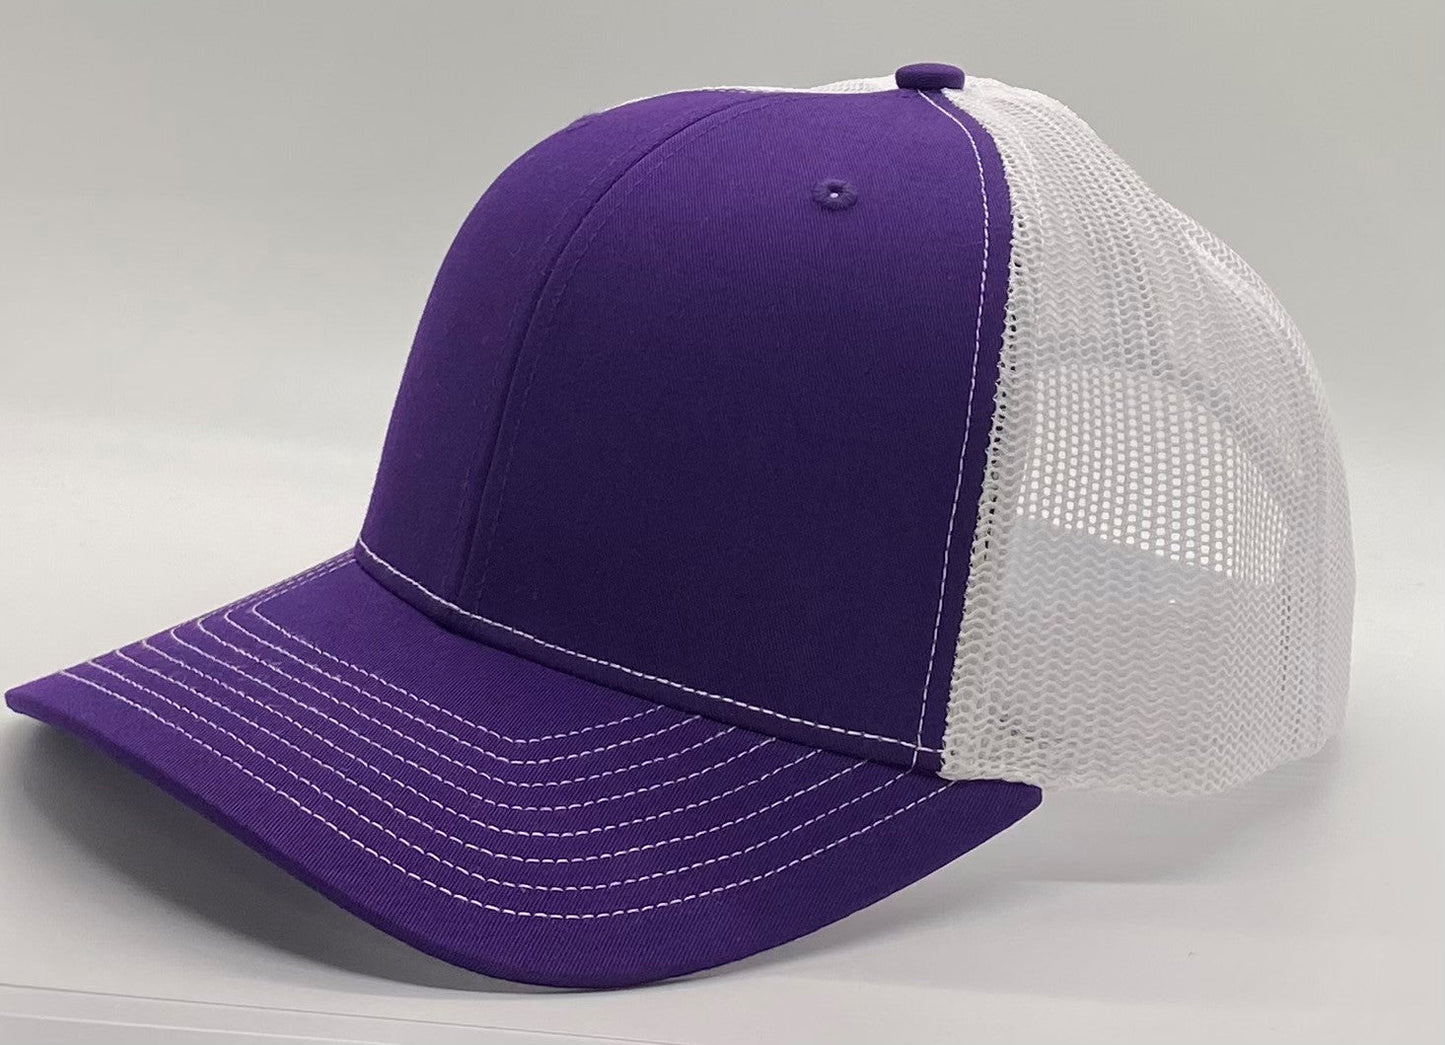 AGA Hockey Girl - Trucker Snapback Hat + Flex Fit Option